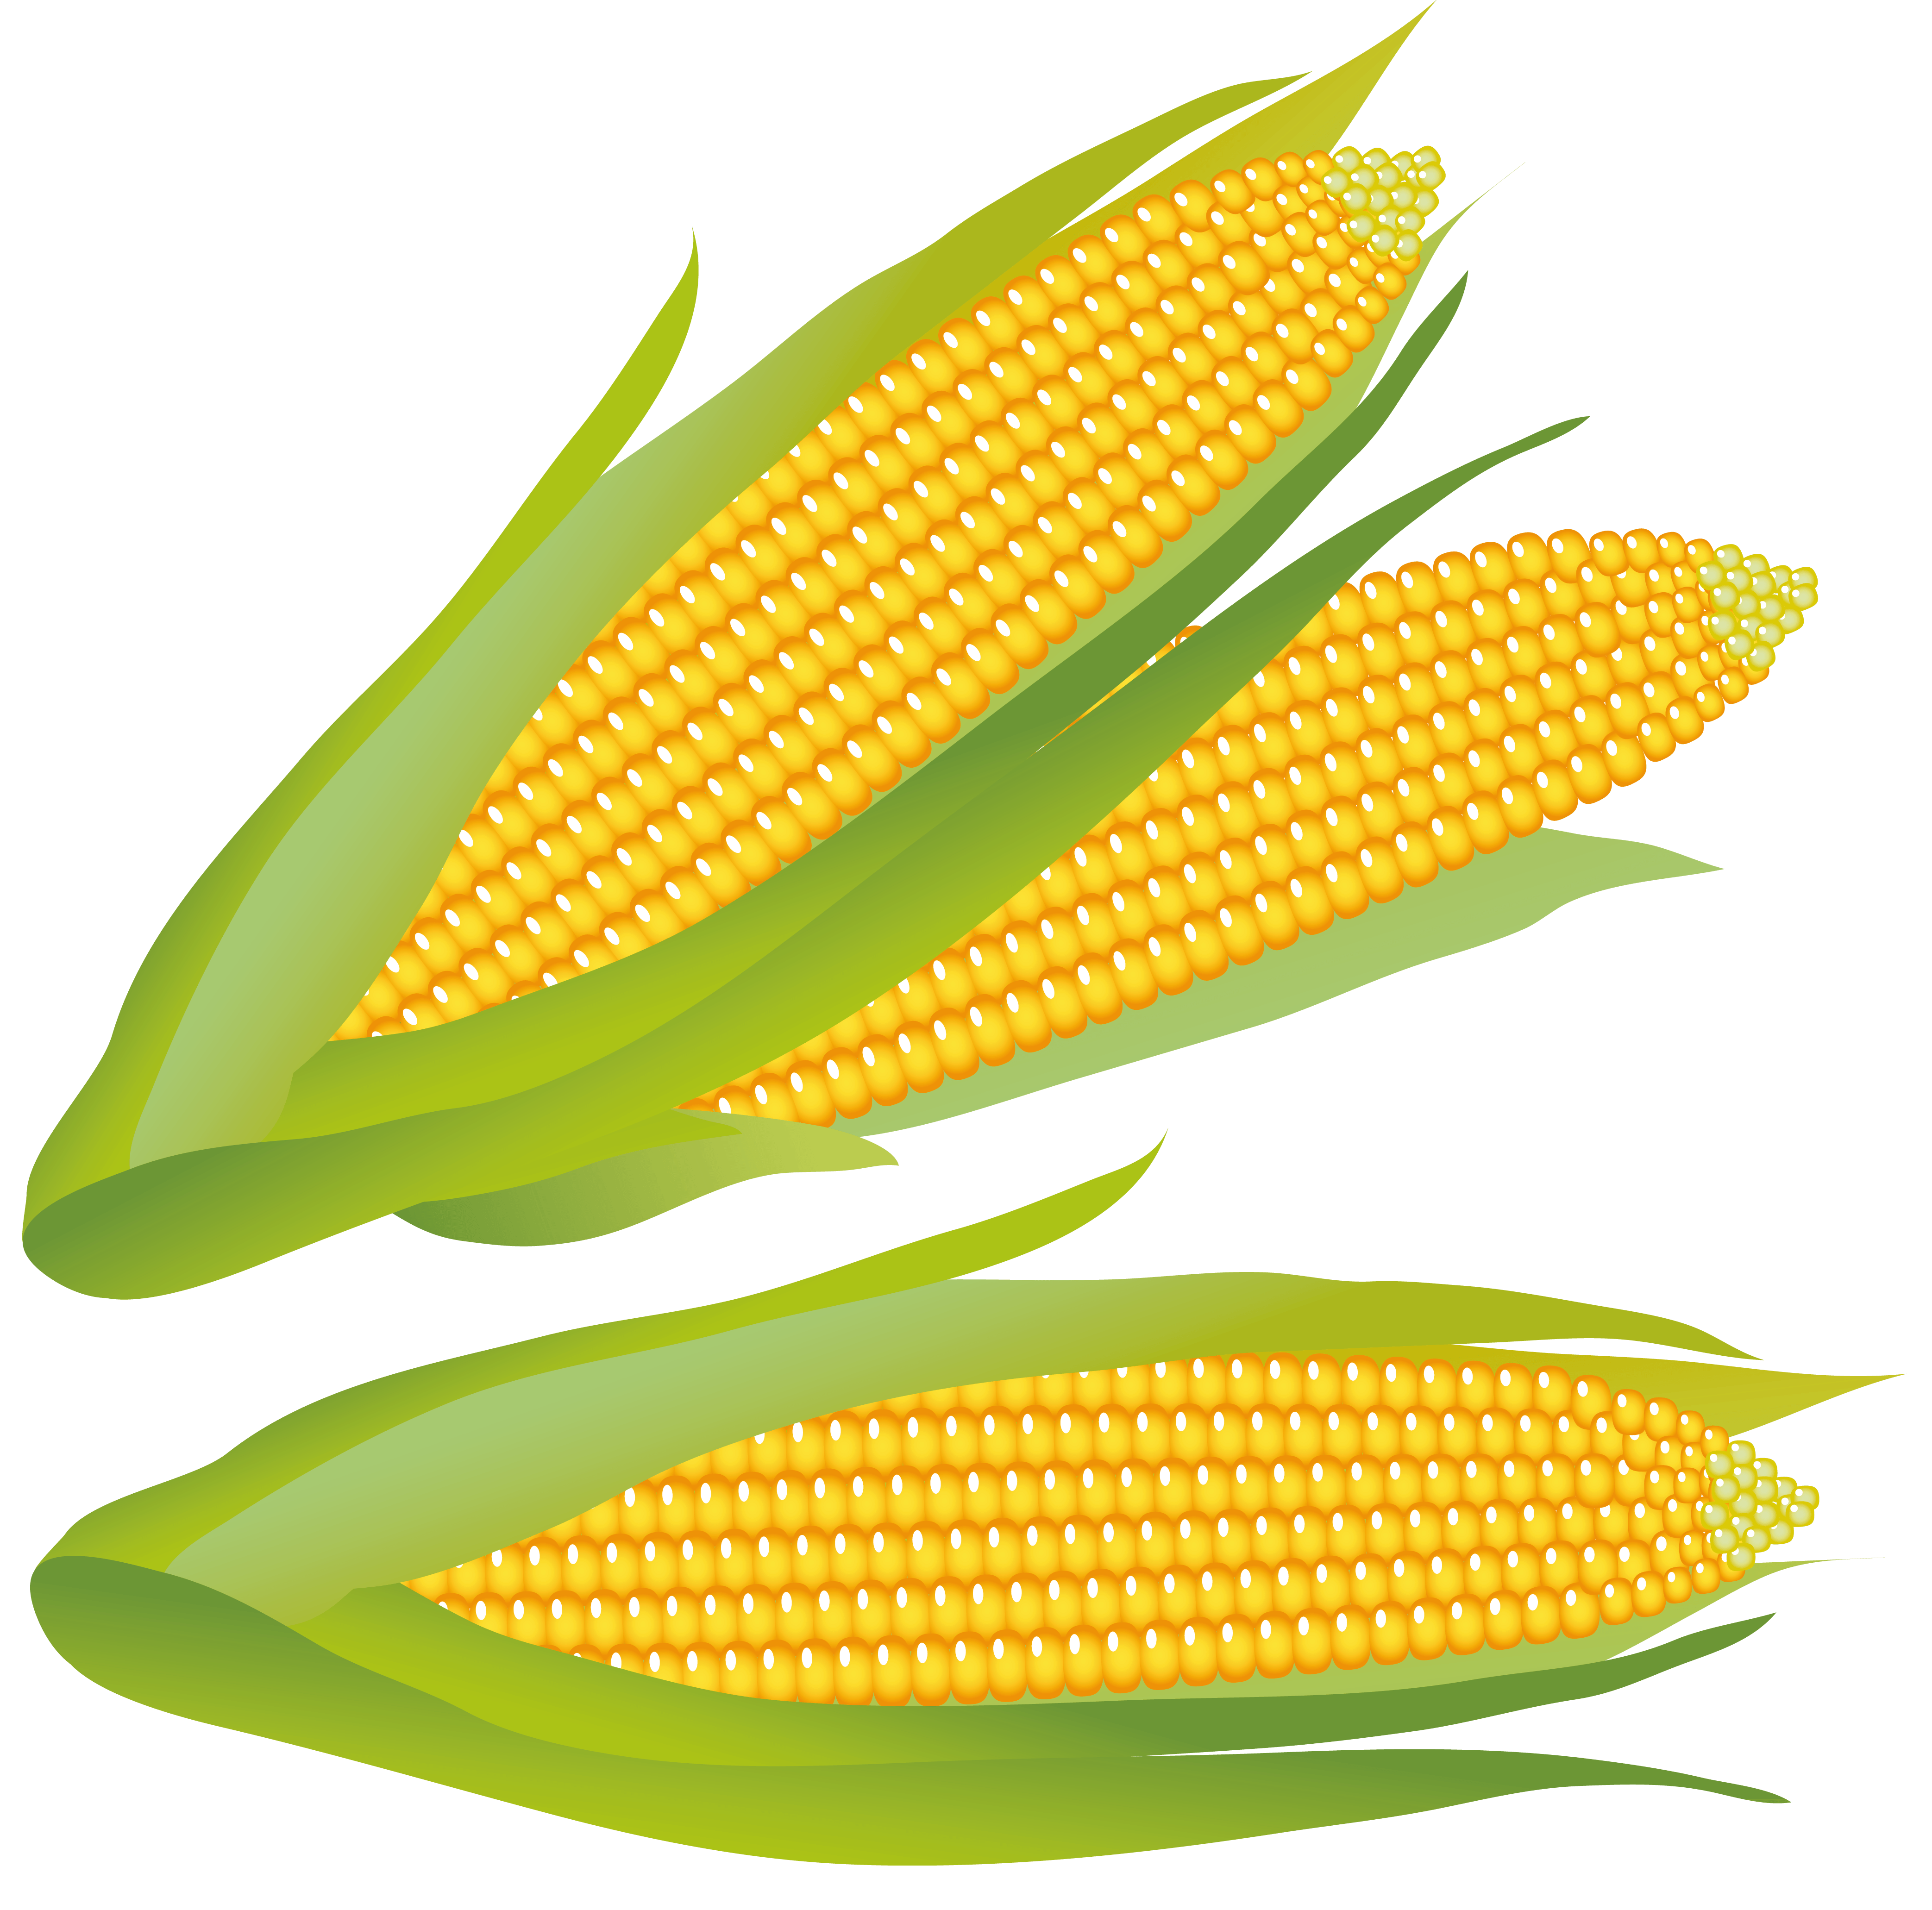 Corn kidz. Кукурузный початок. Кукуруза мультяшная. Кукуруза вектор. Початок кукурузы вектор.